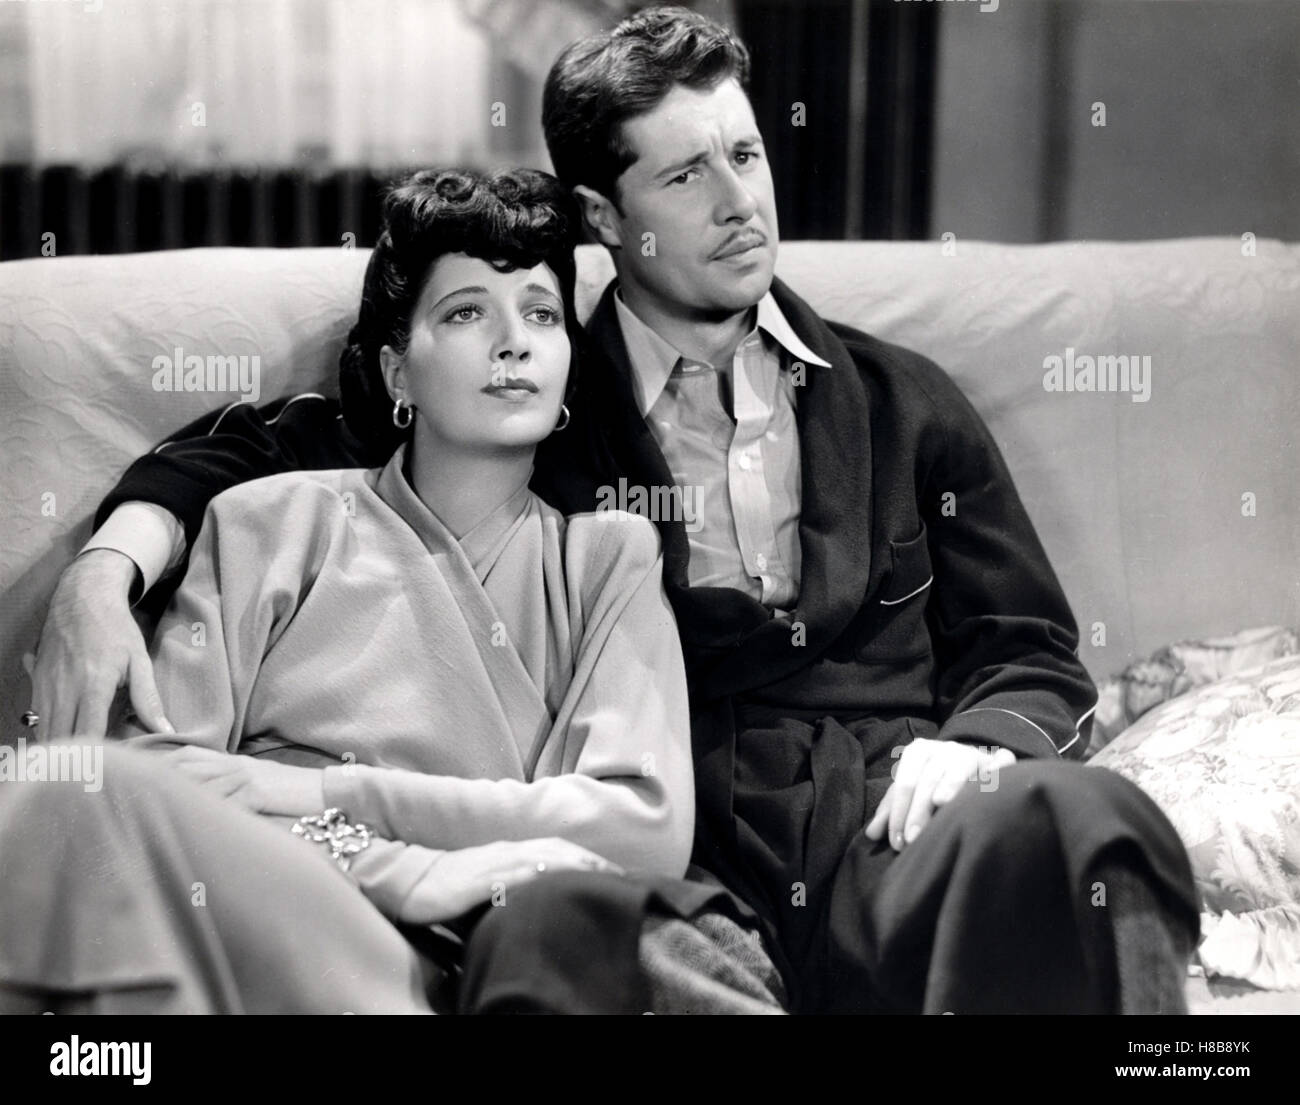 Il tocco femminile, (il tocco femminile) USA 1941 s/w, Regie: W.S. Van Dyke, Rosalind Russell, DON AMECHE Foto Stock